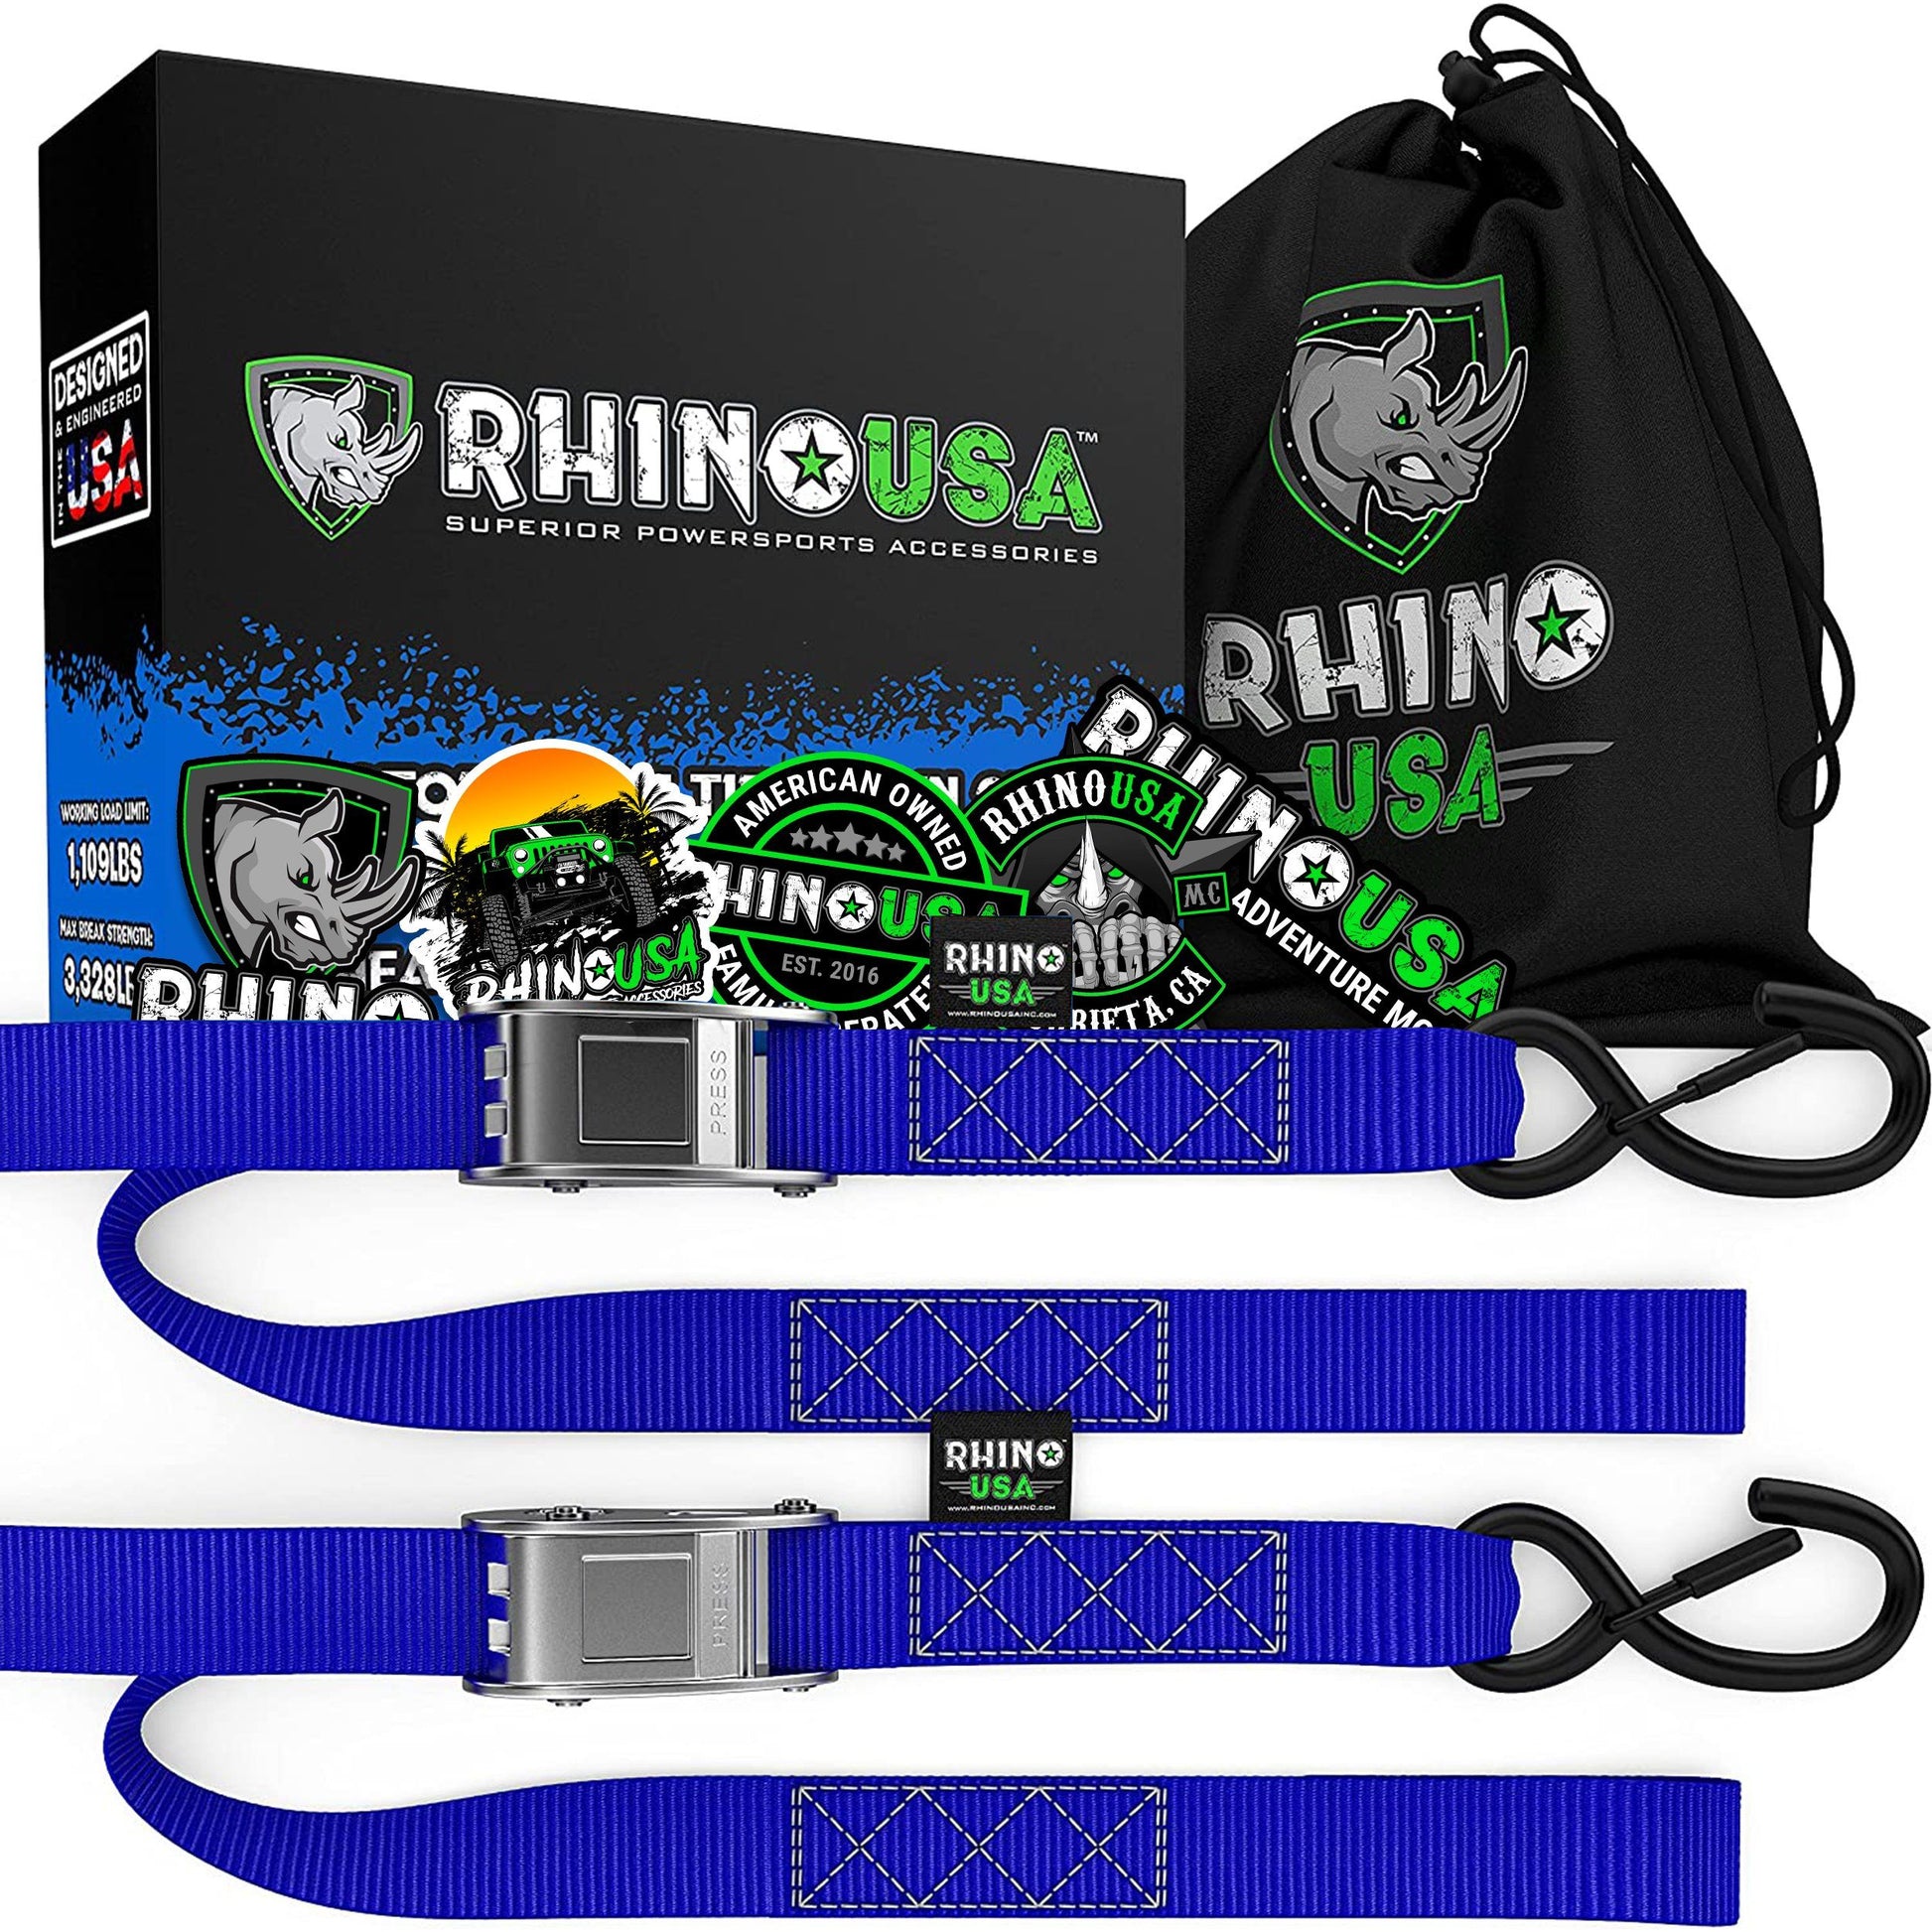 1.5" x 8' Cambuckle Tie-Down Straps (2-Pack) Rhino USA, Inc. Blue 